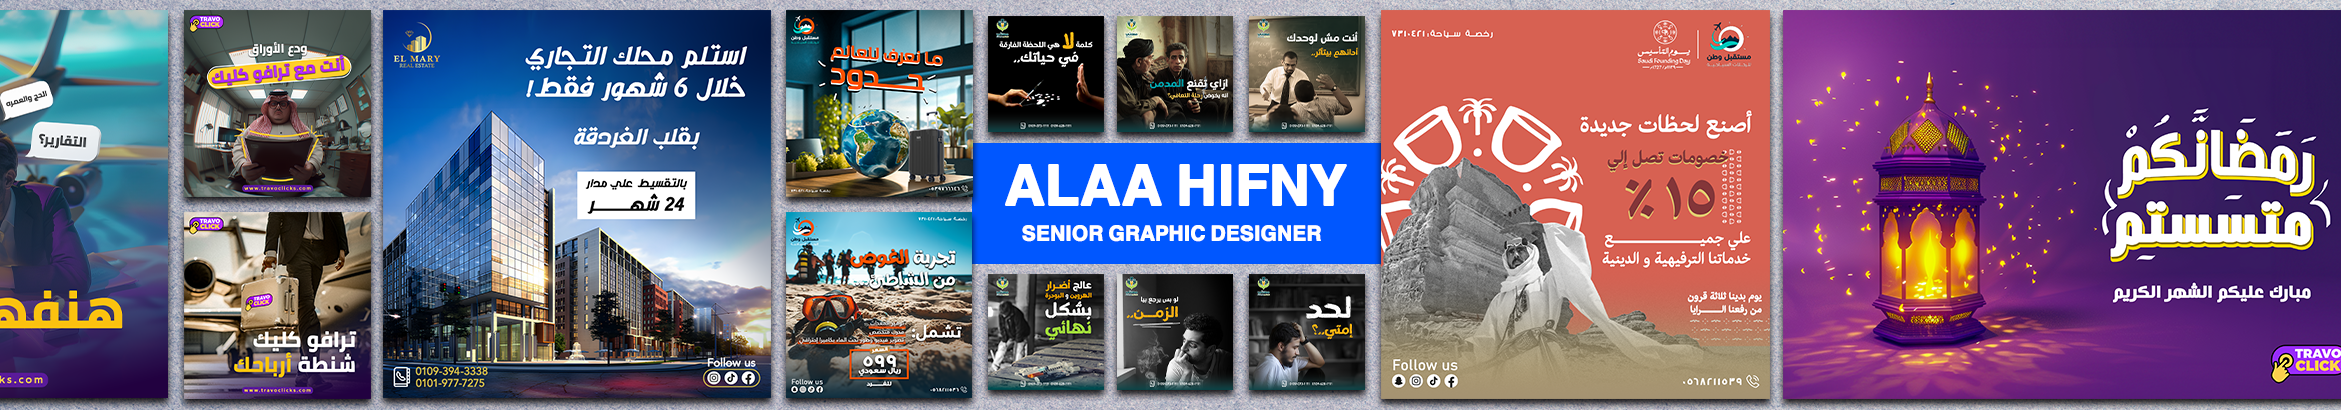 Alaa Hifnys profilbanner